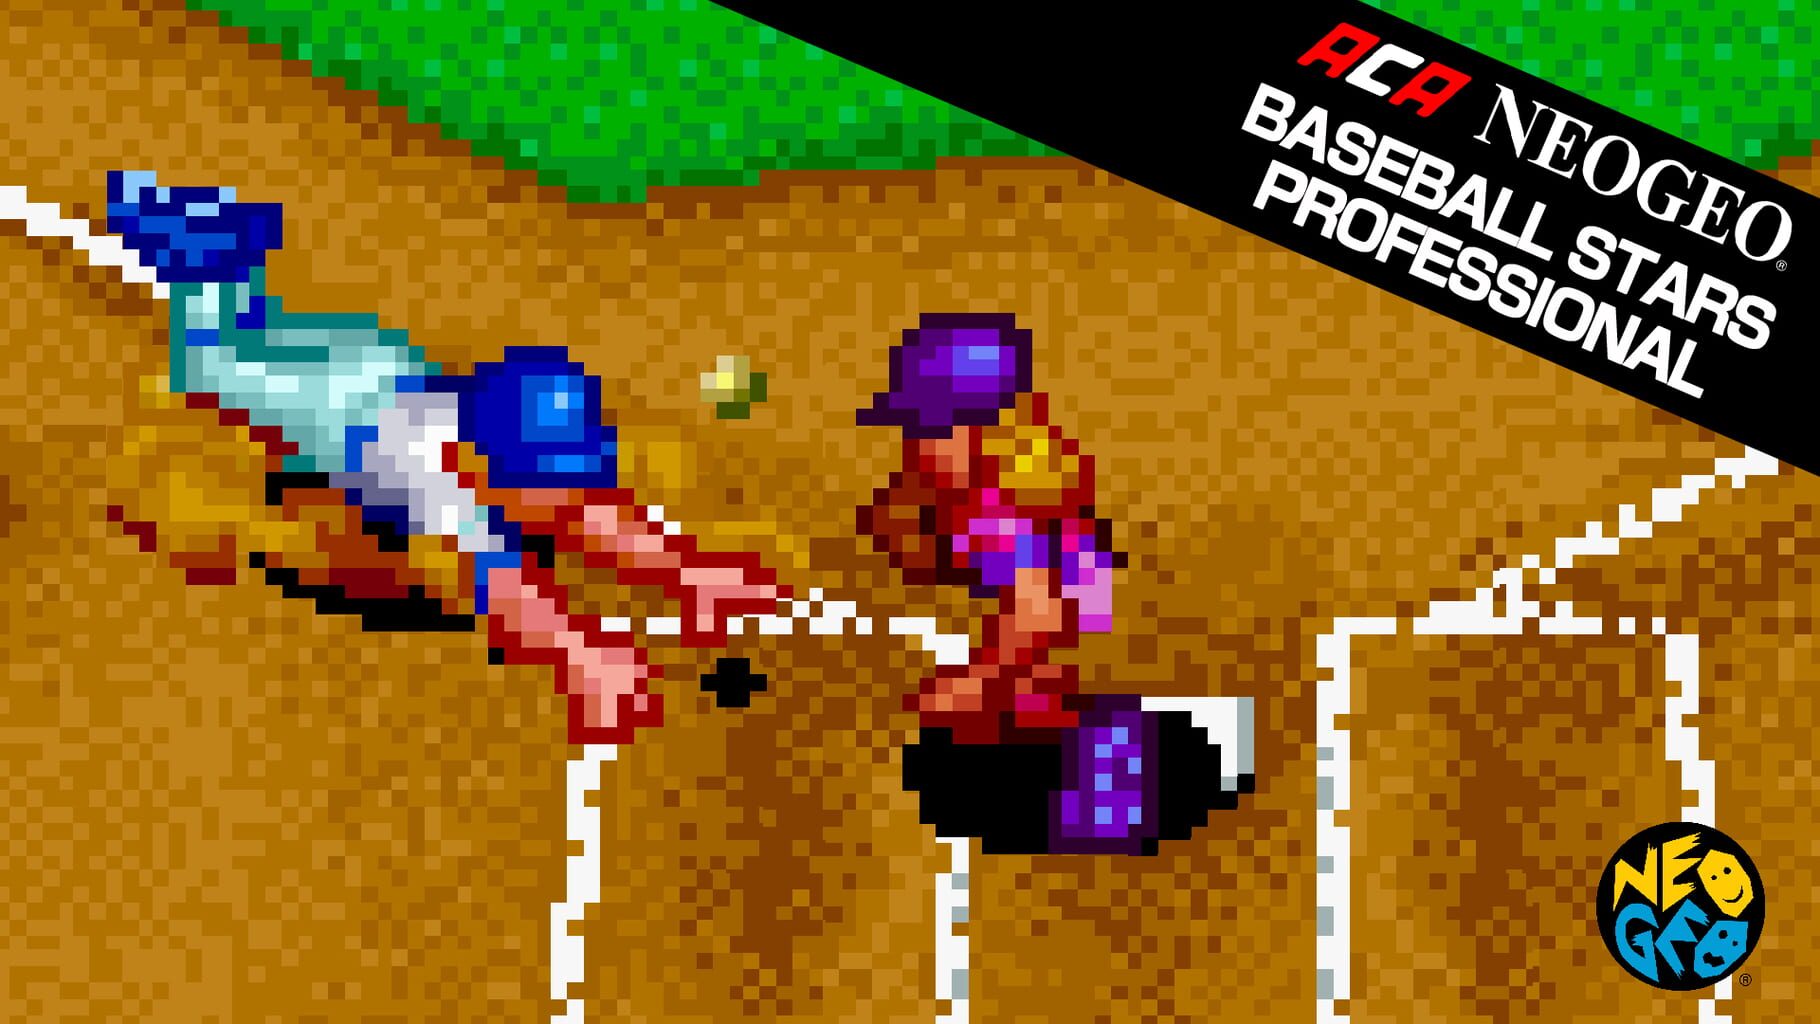 Arte - ACA Neo Geo: Baseball Stars Professional